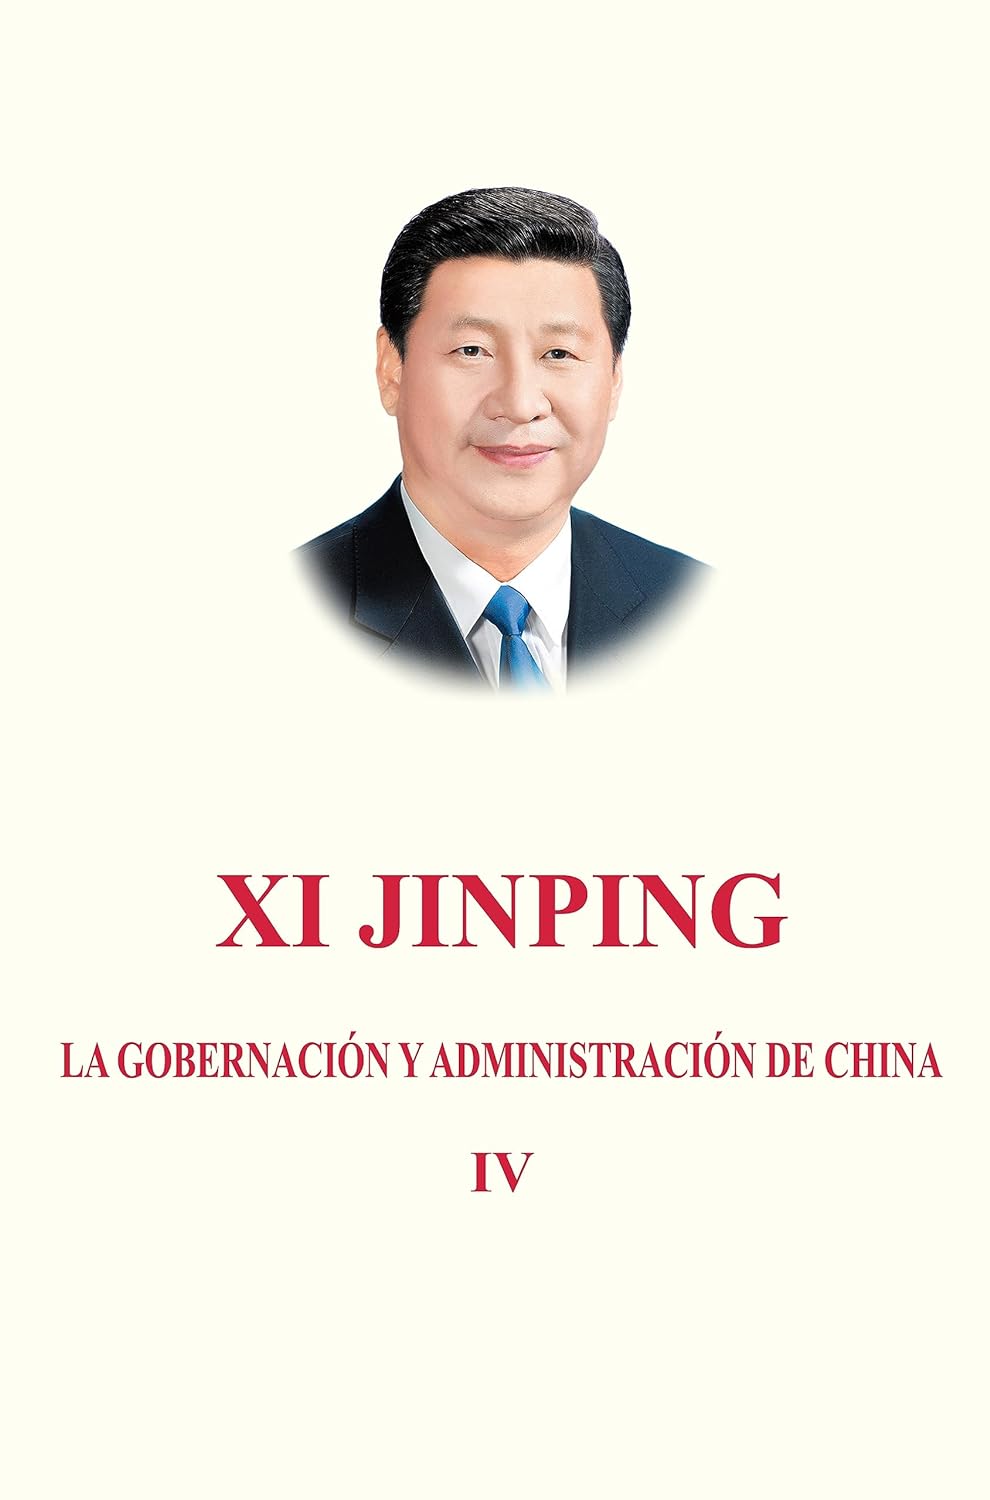 Xi Jinping: The Governance of China Vol. 4 (Spanish) - Paperback